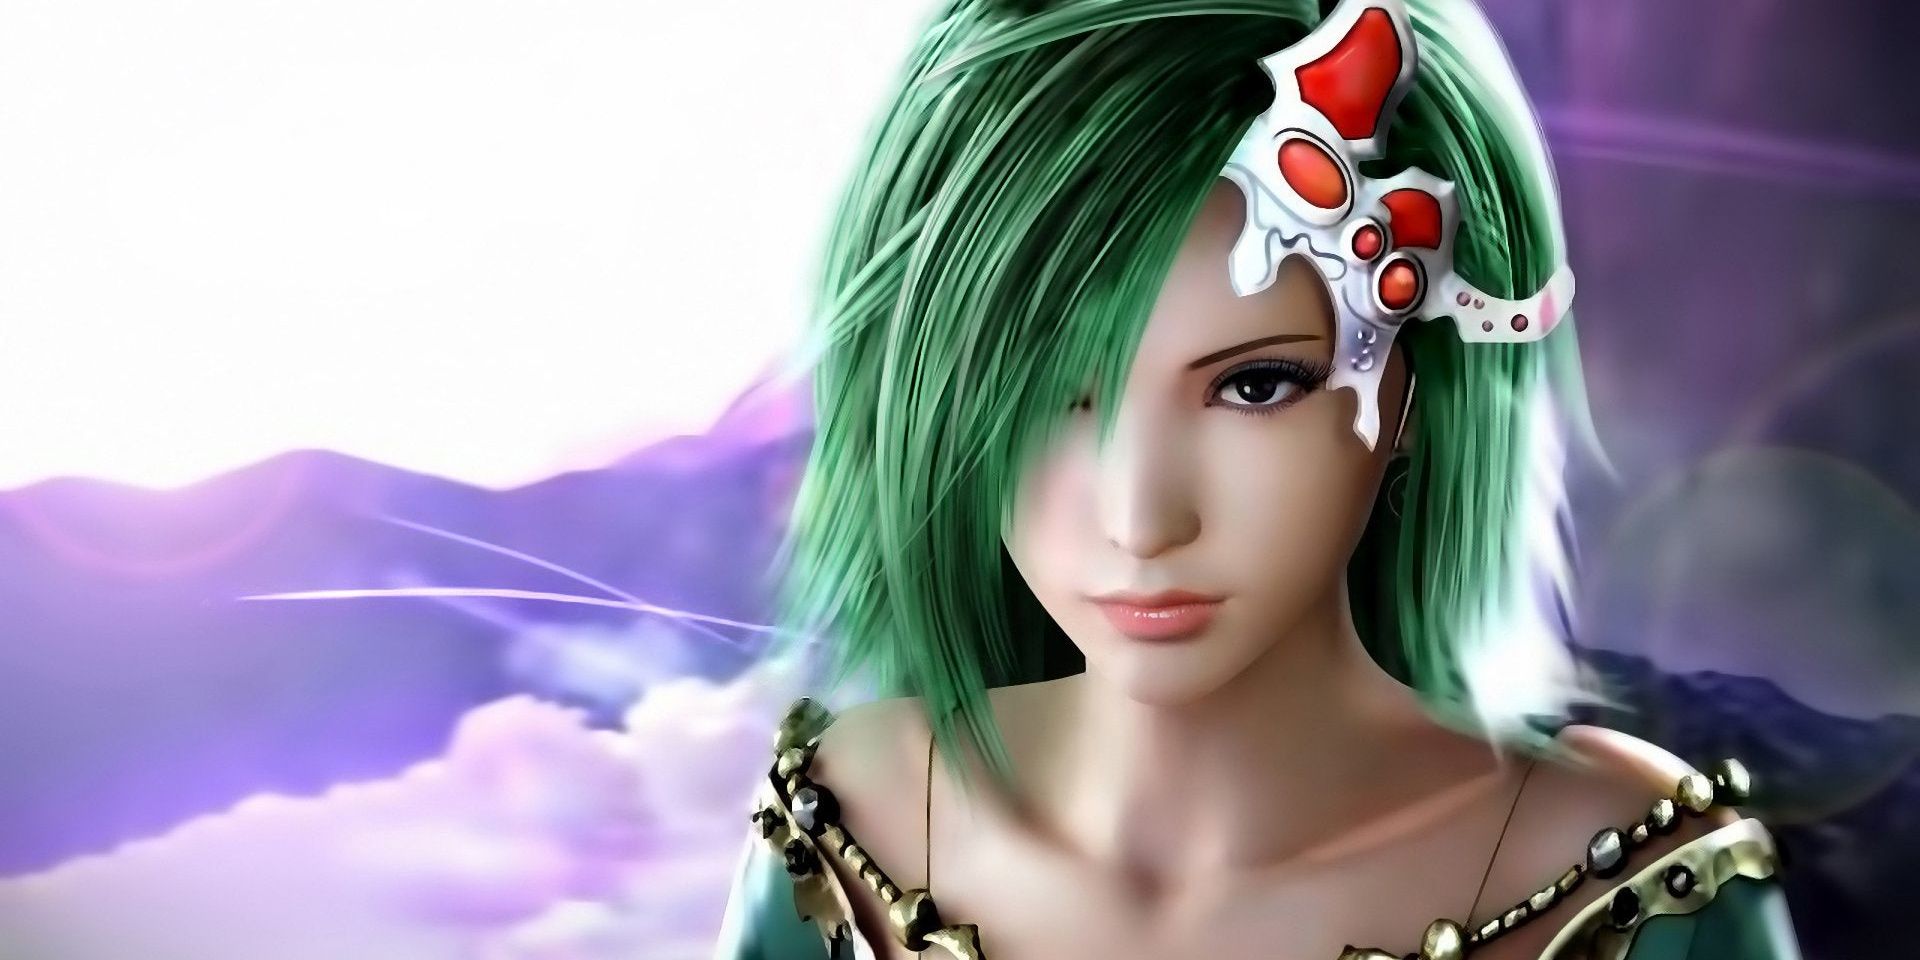 Rydia from Final Fantasy IV